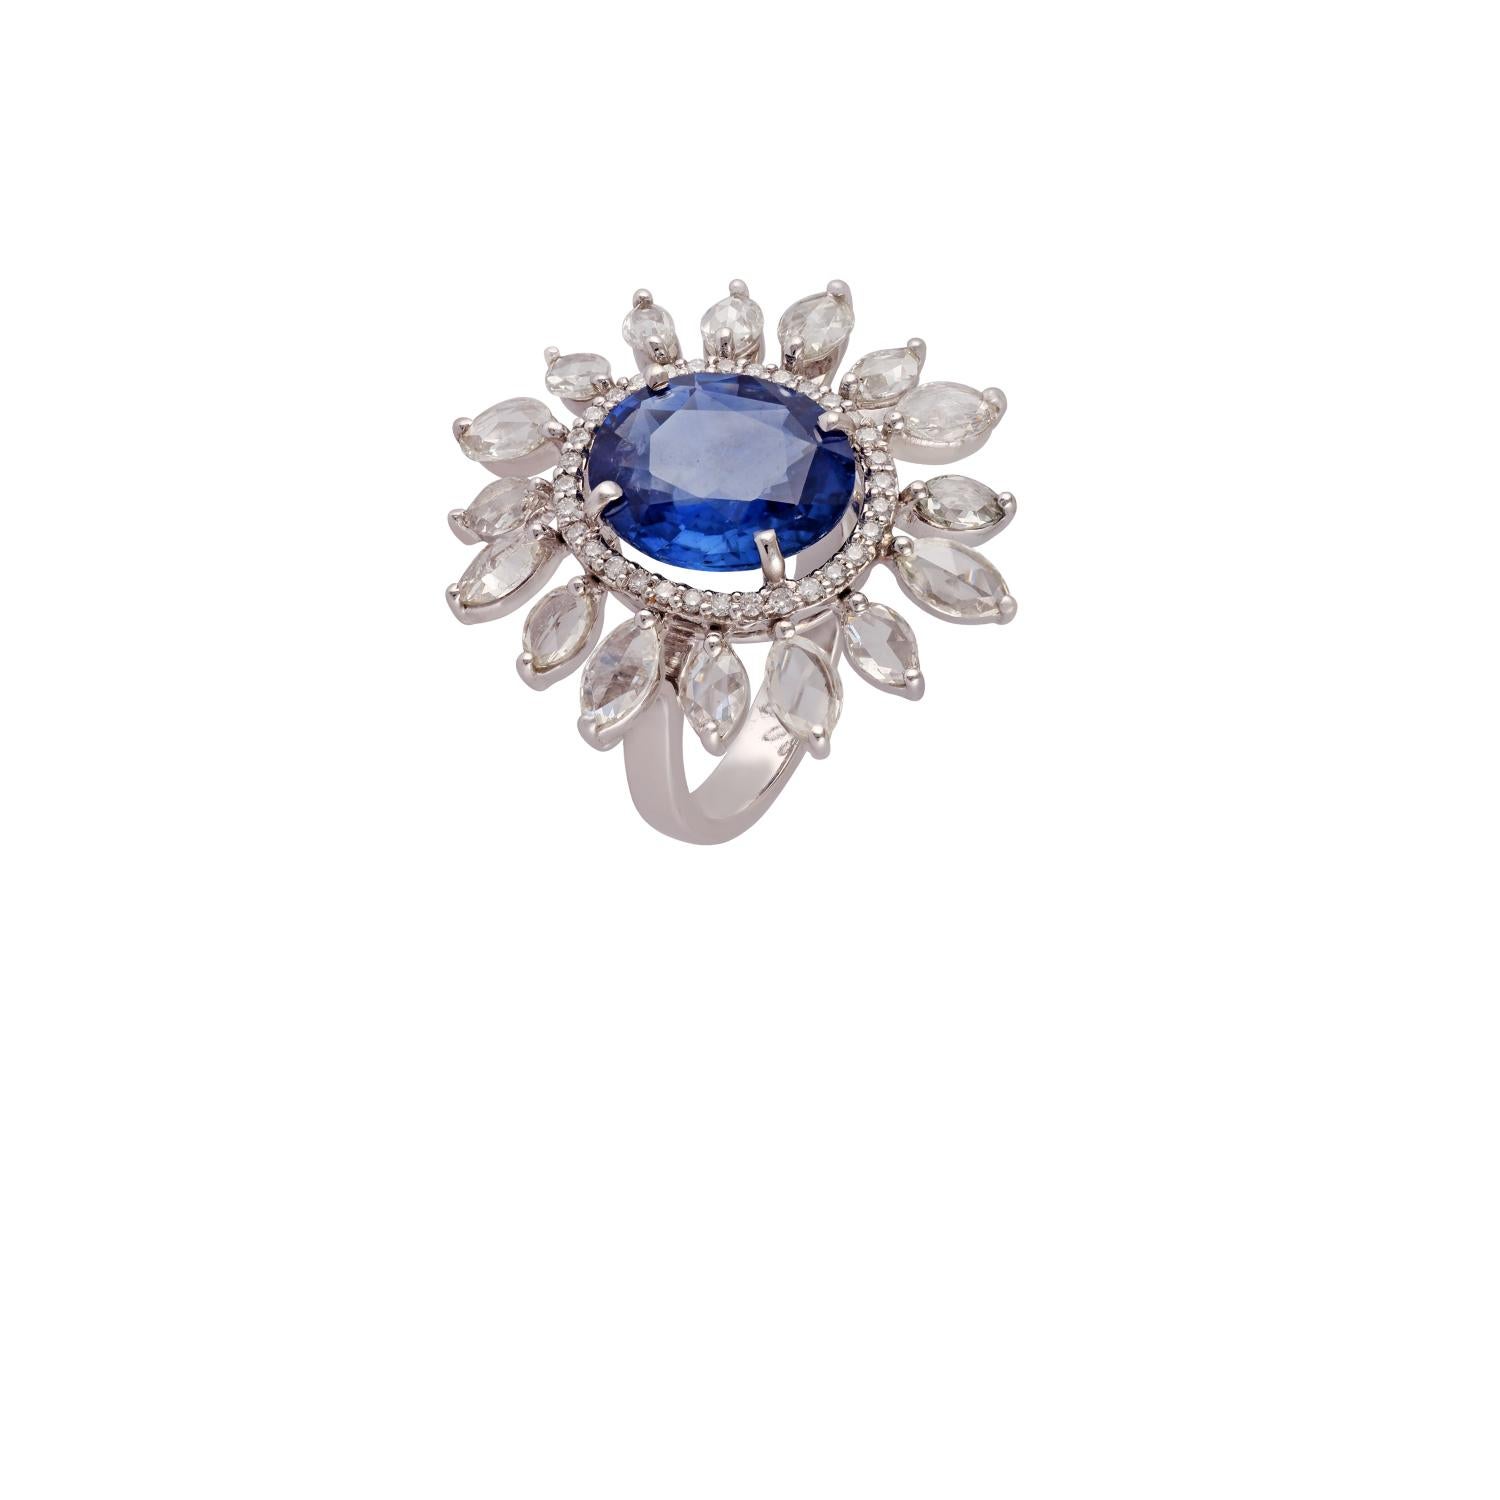 Oval Cut 6.37 Carat Blue Sapphire & Diamond Ring Studded in 18k Gold